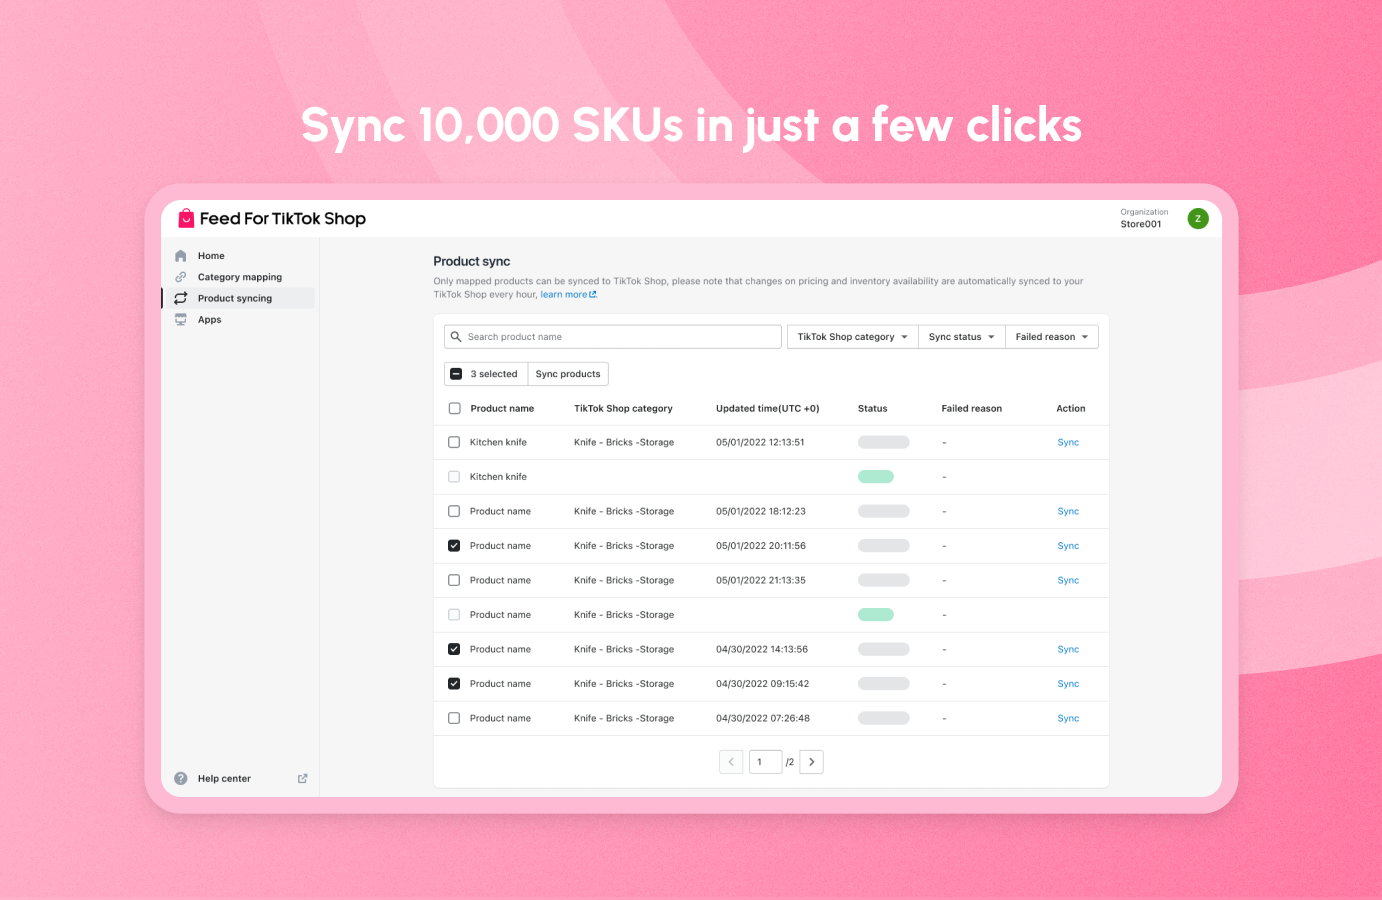 Sync 10,000 SKUs in just a few clicks